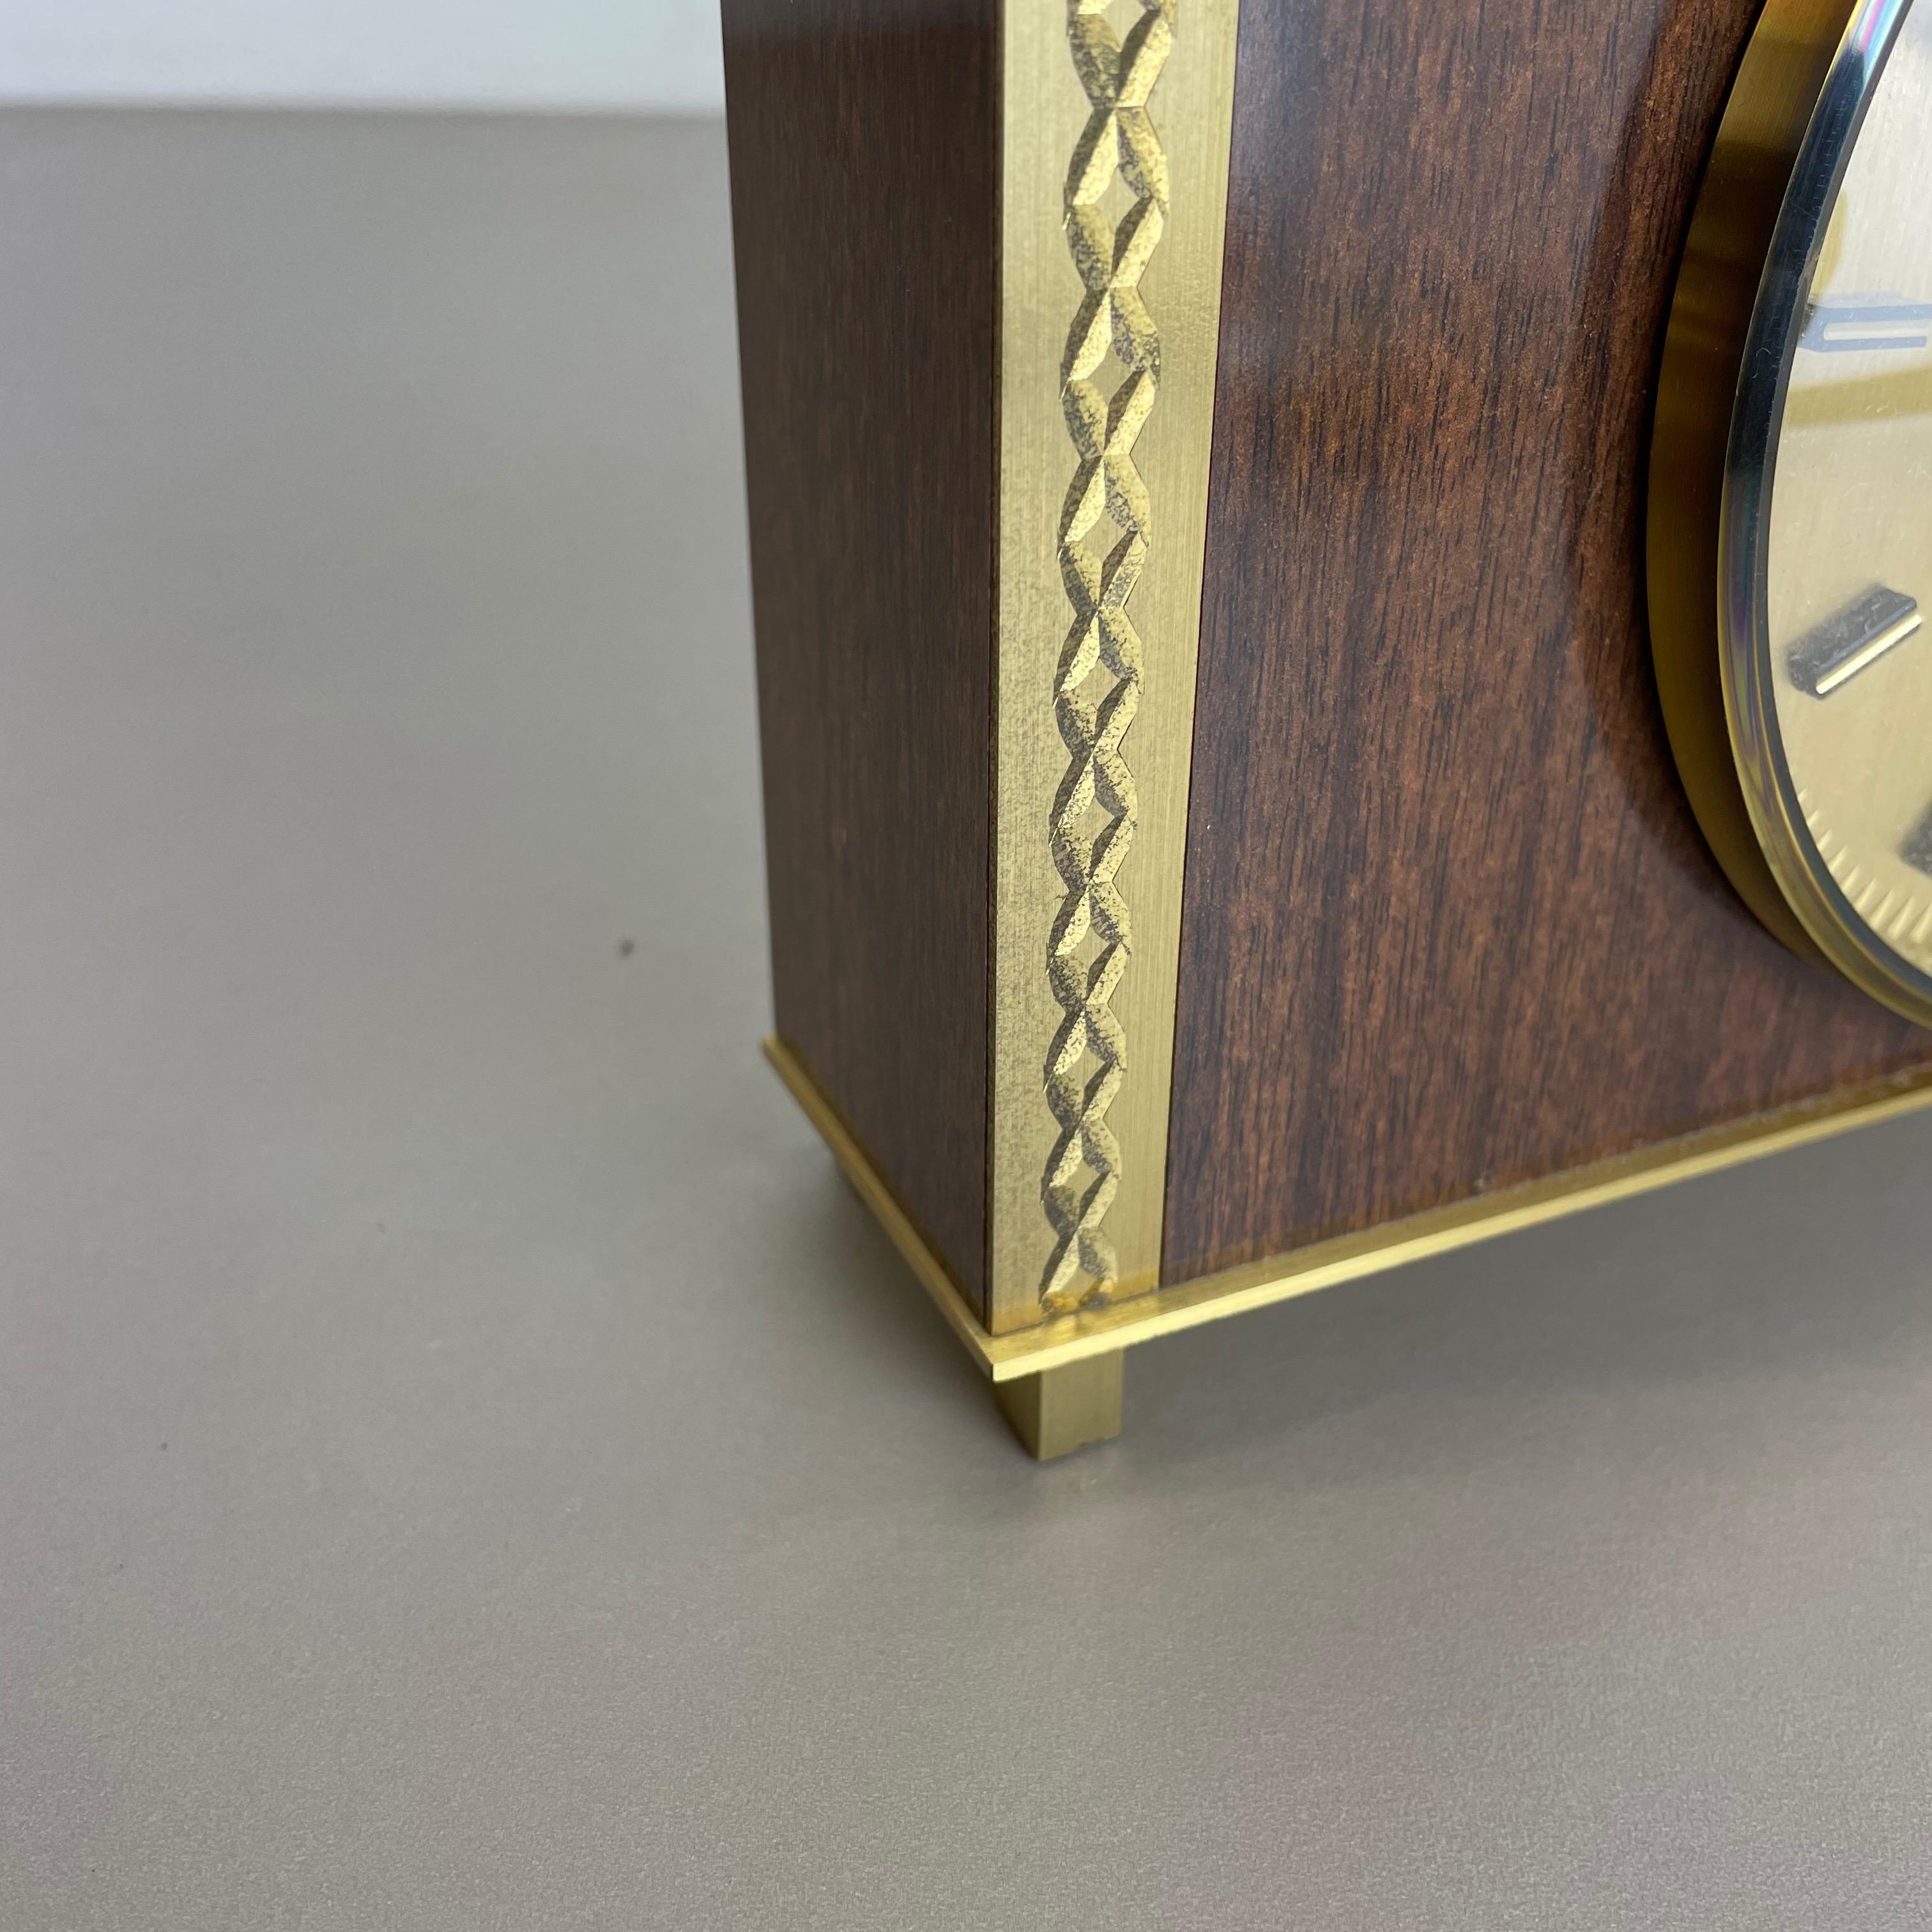 Vintage 1960s Modernist Wooden Teak Brass Table Clock by Dugena, Germany For Sale 2